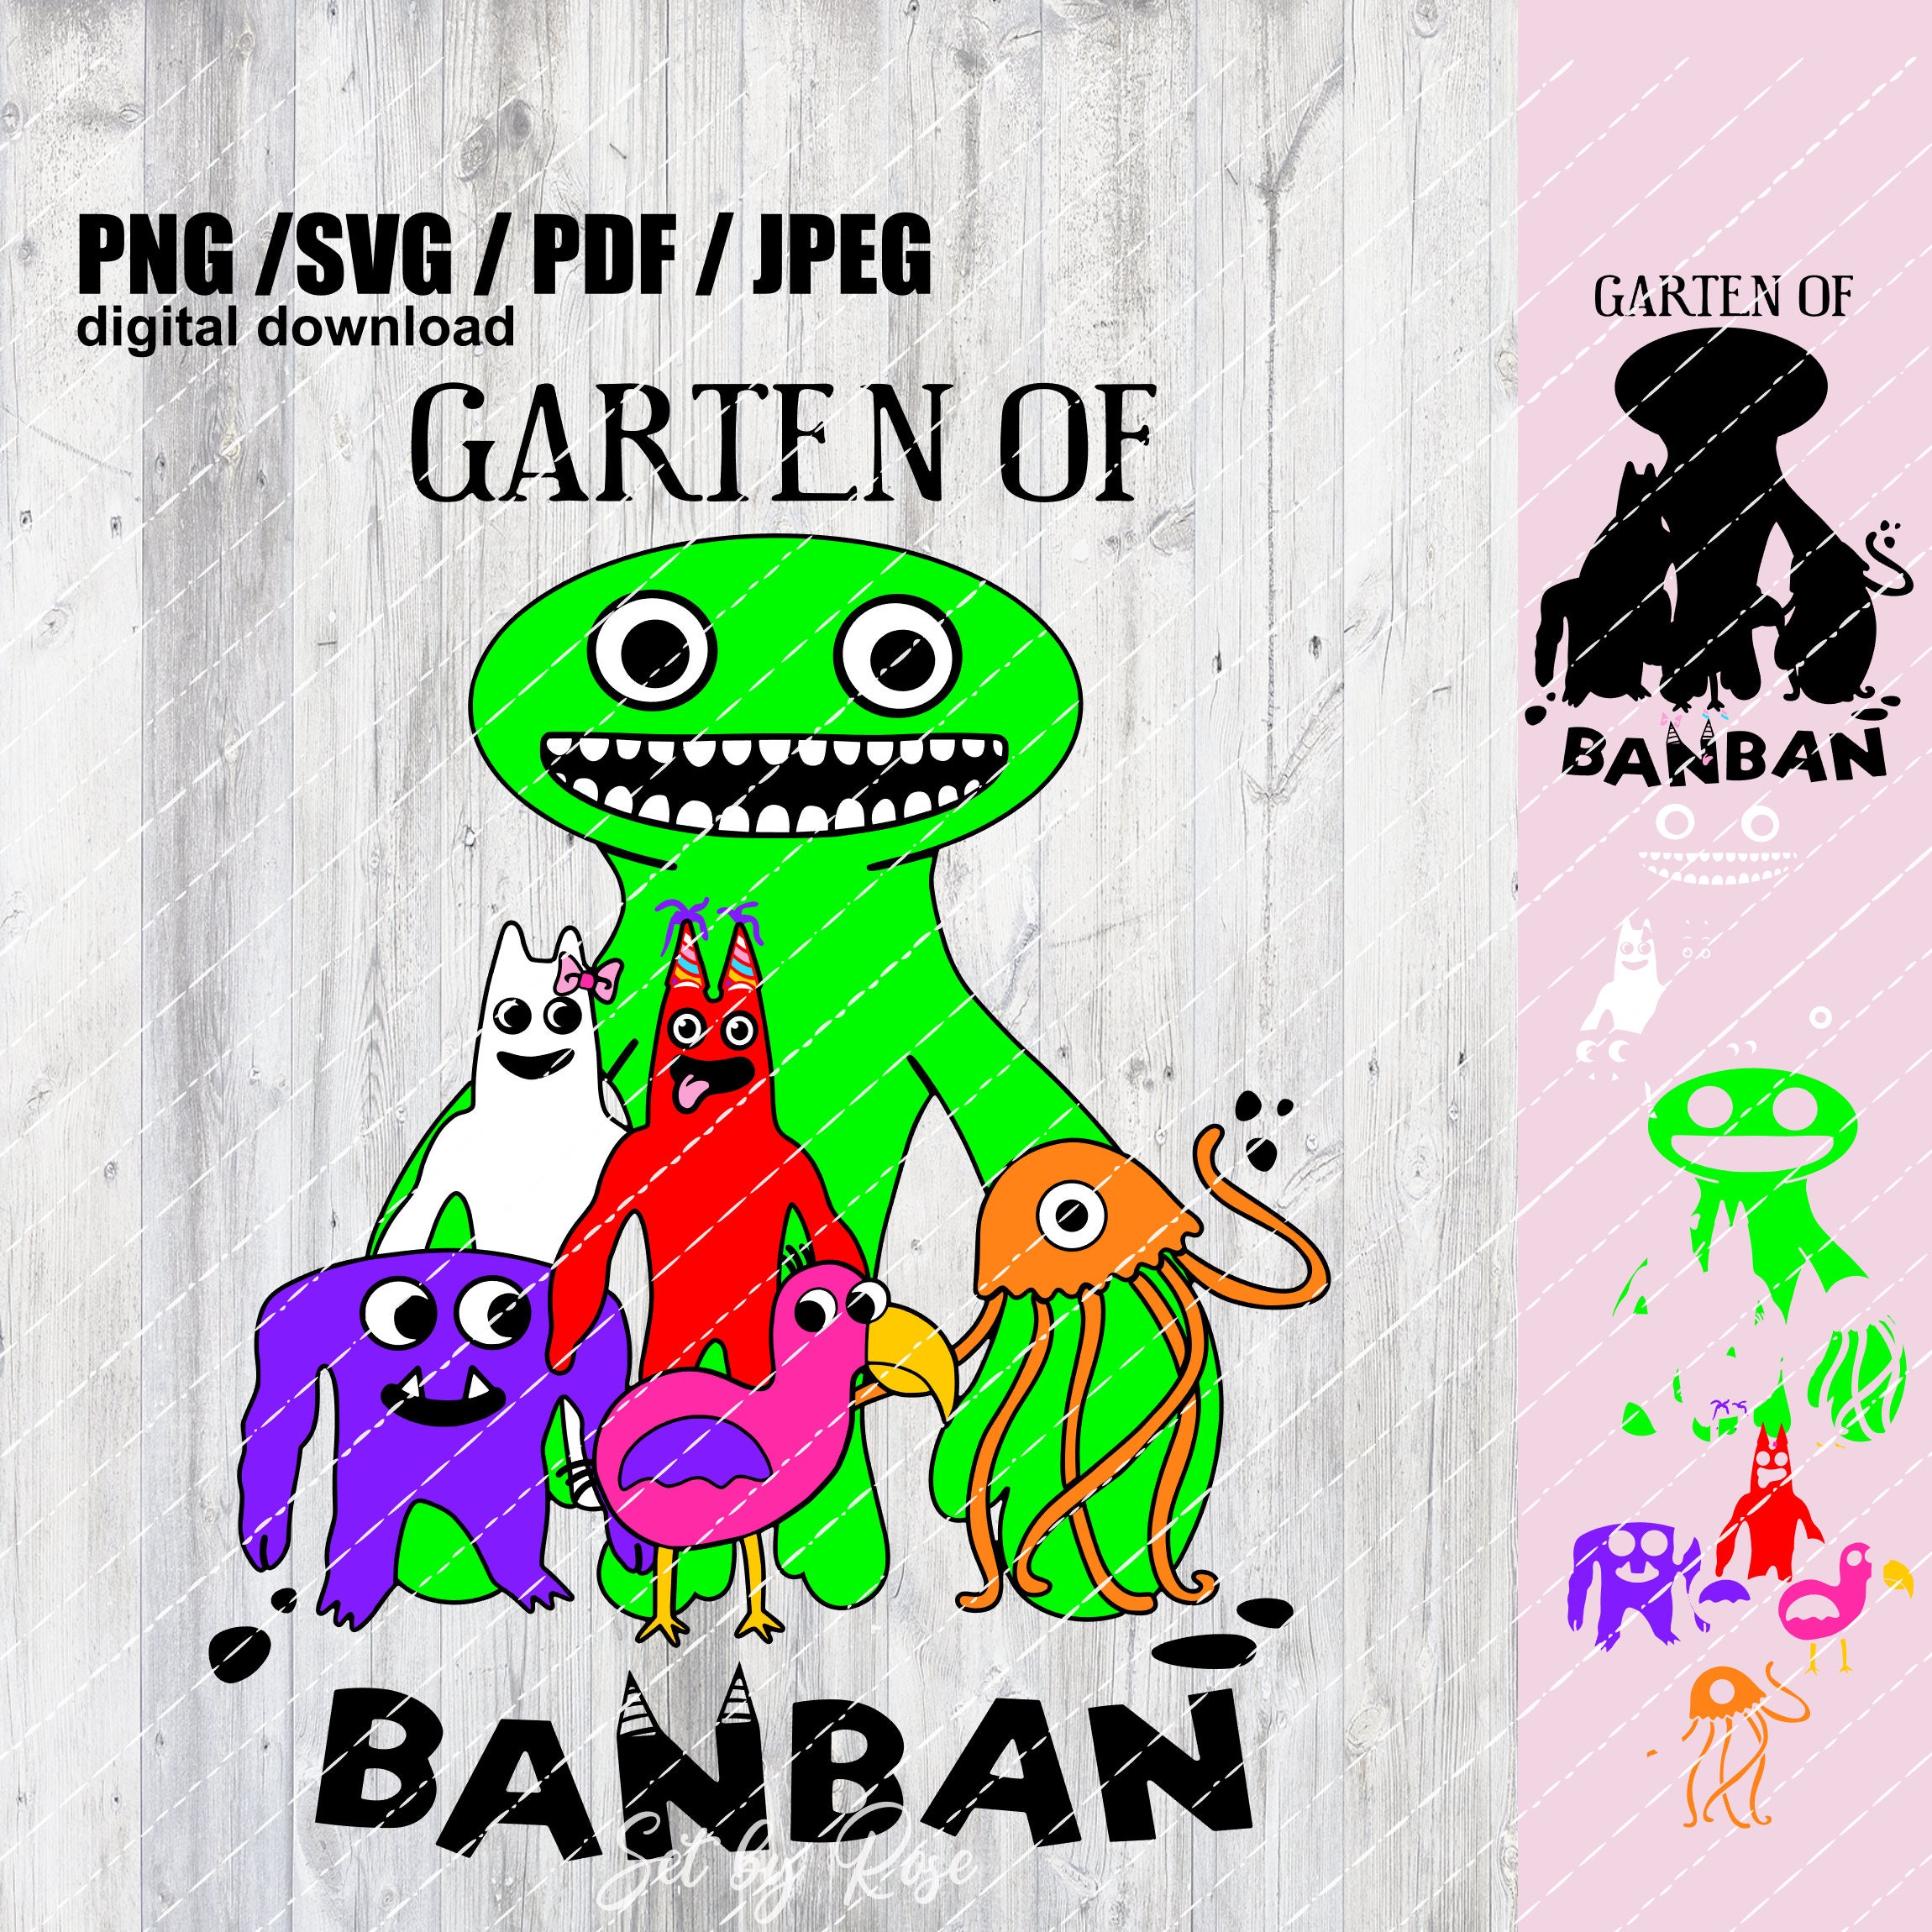 Nabnab Garten of Banban - Garten Of Banban - T-Shirt